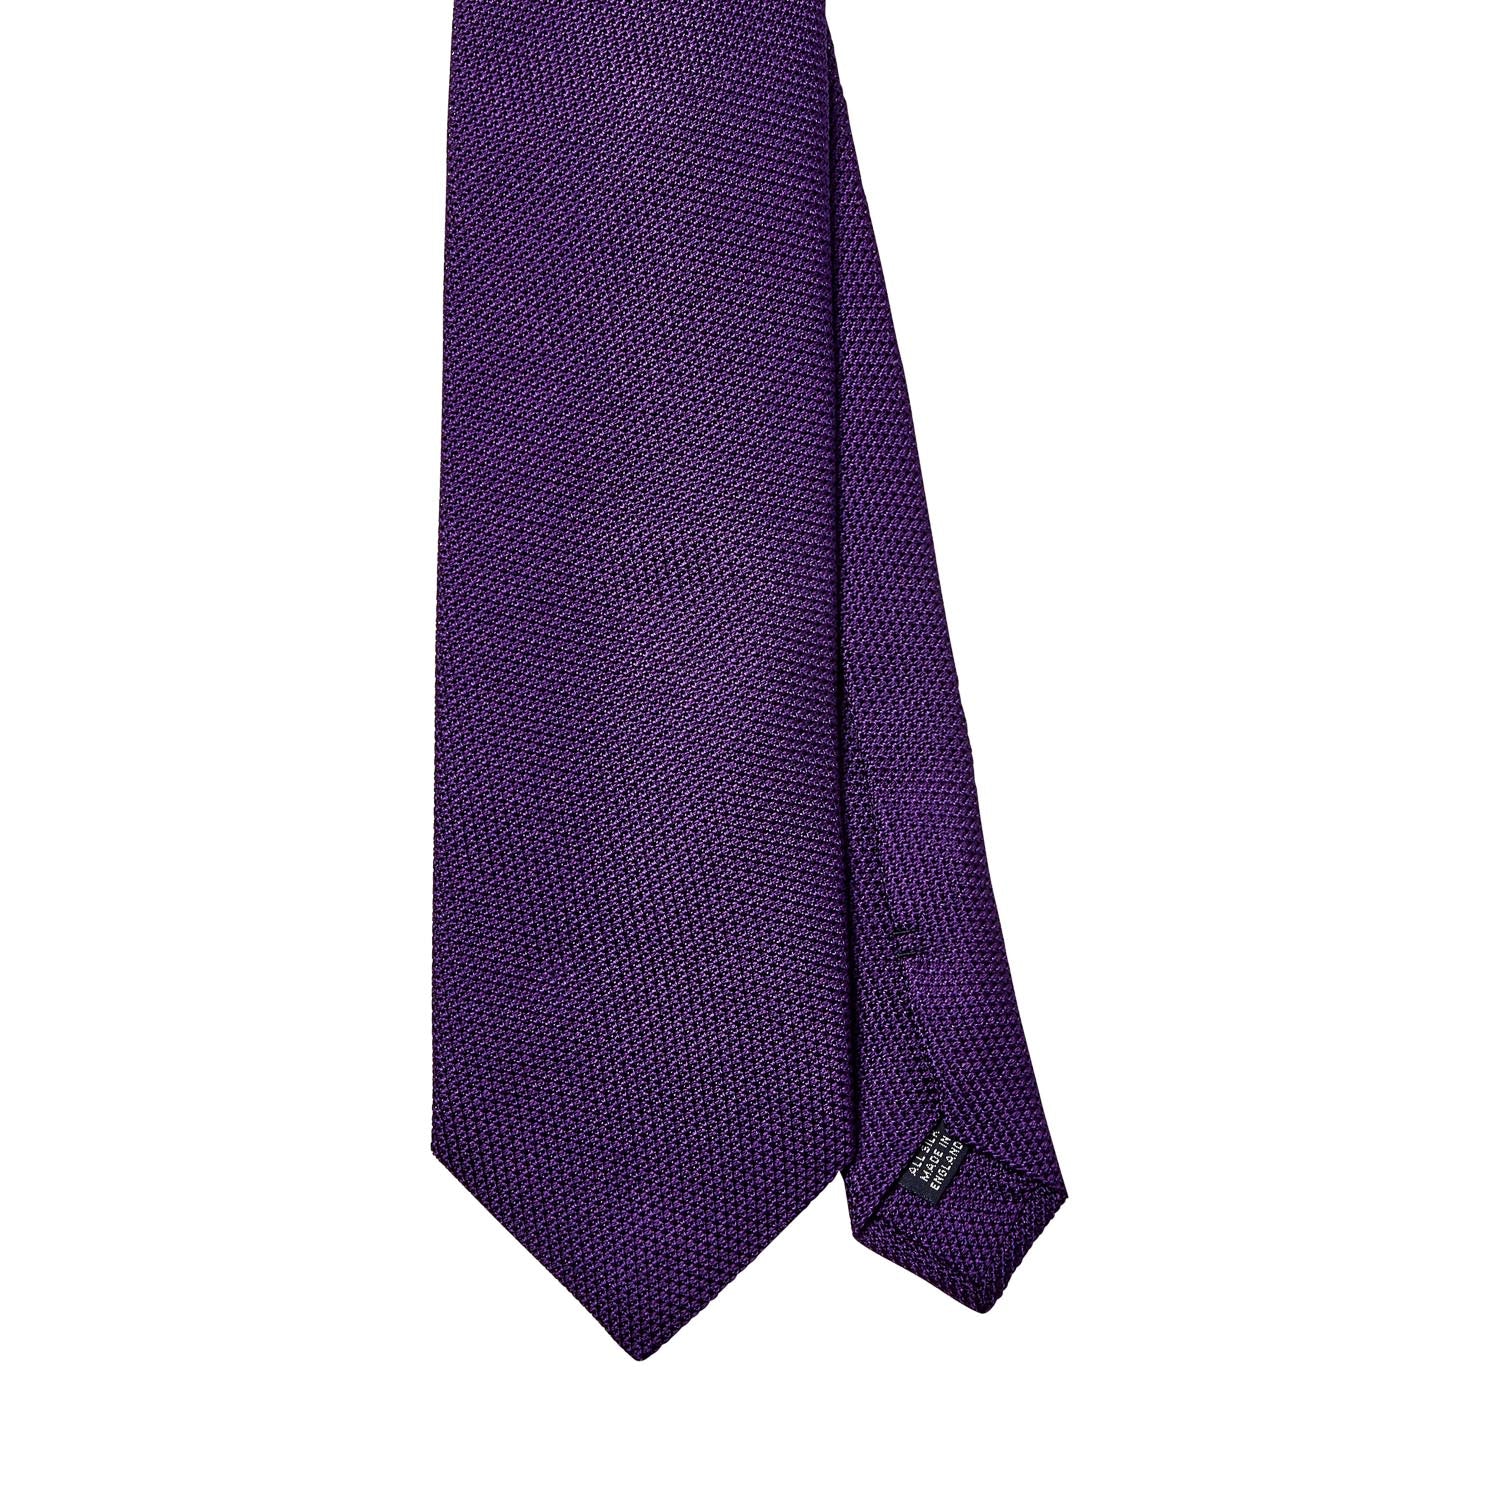 A Sovereign Grade Grenadine Fina Purple Tie by KirbyAllison.com on a white background.